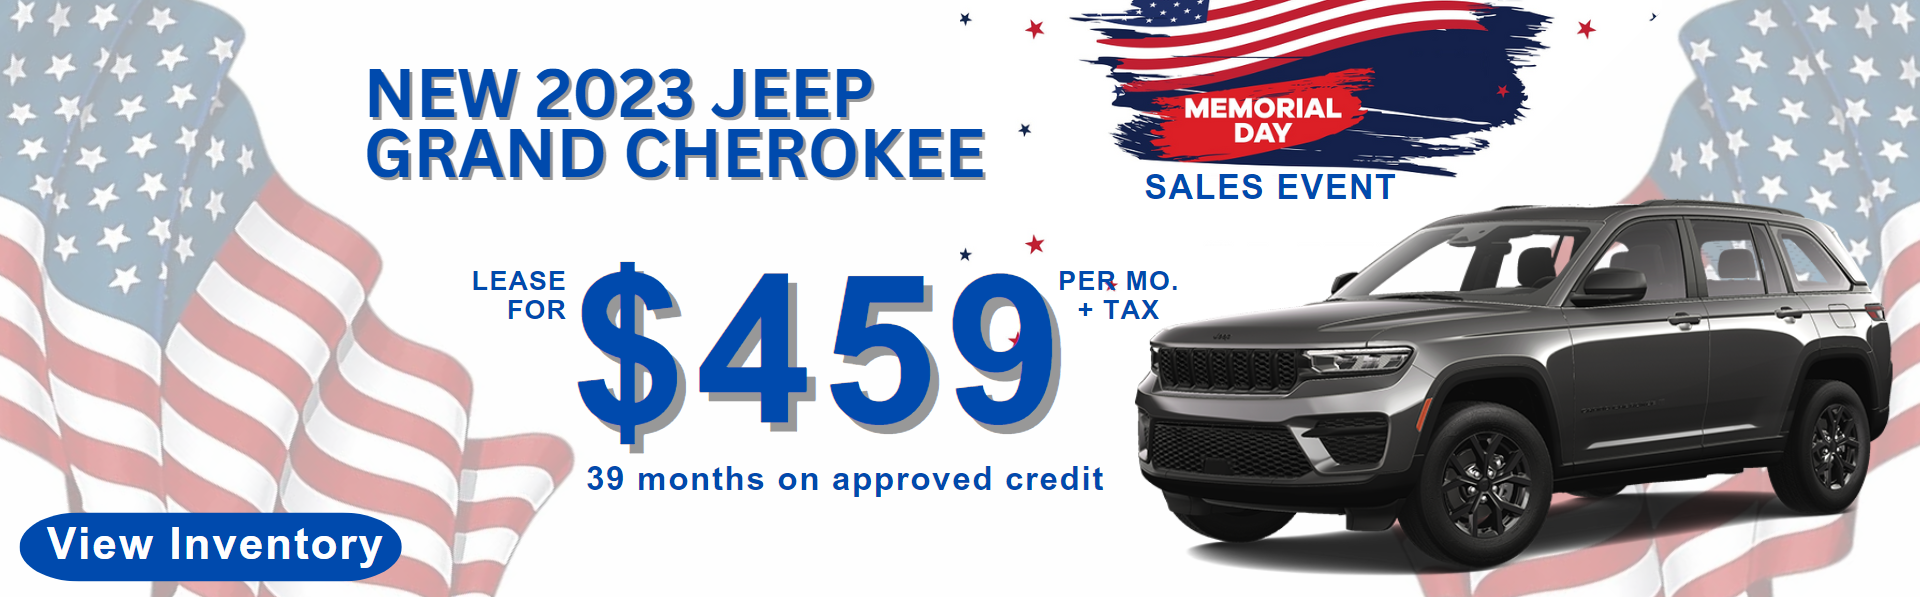 2023 Jeep Grand Cherokee Lease